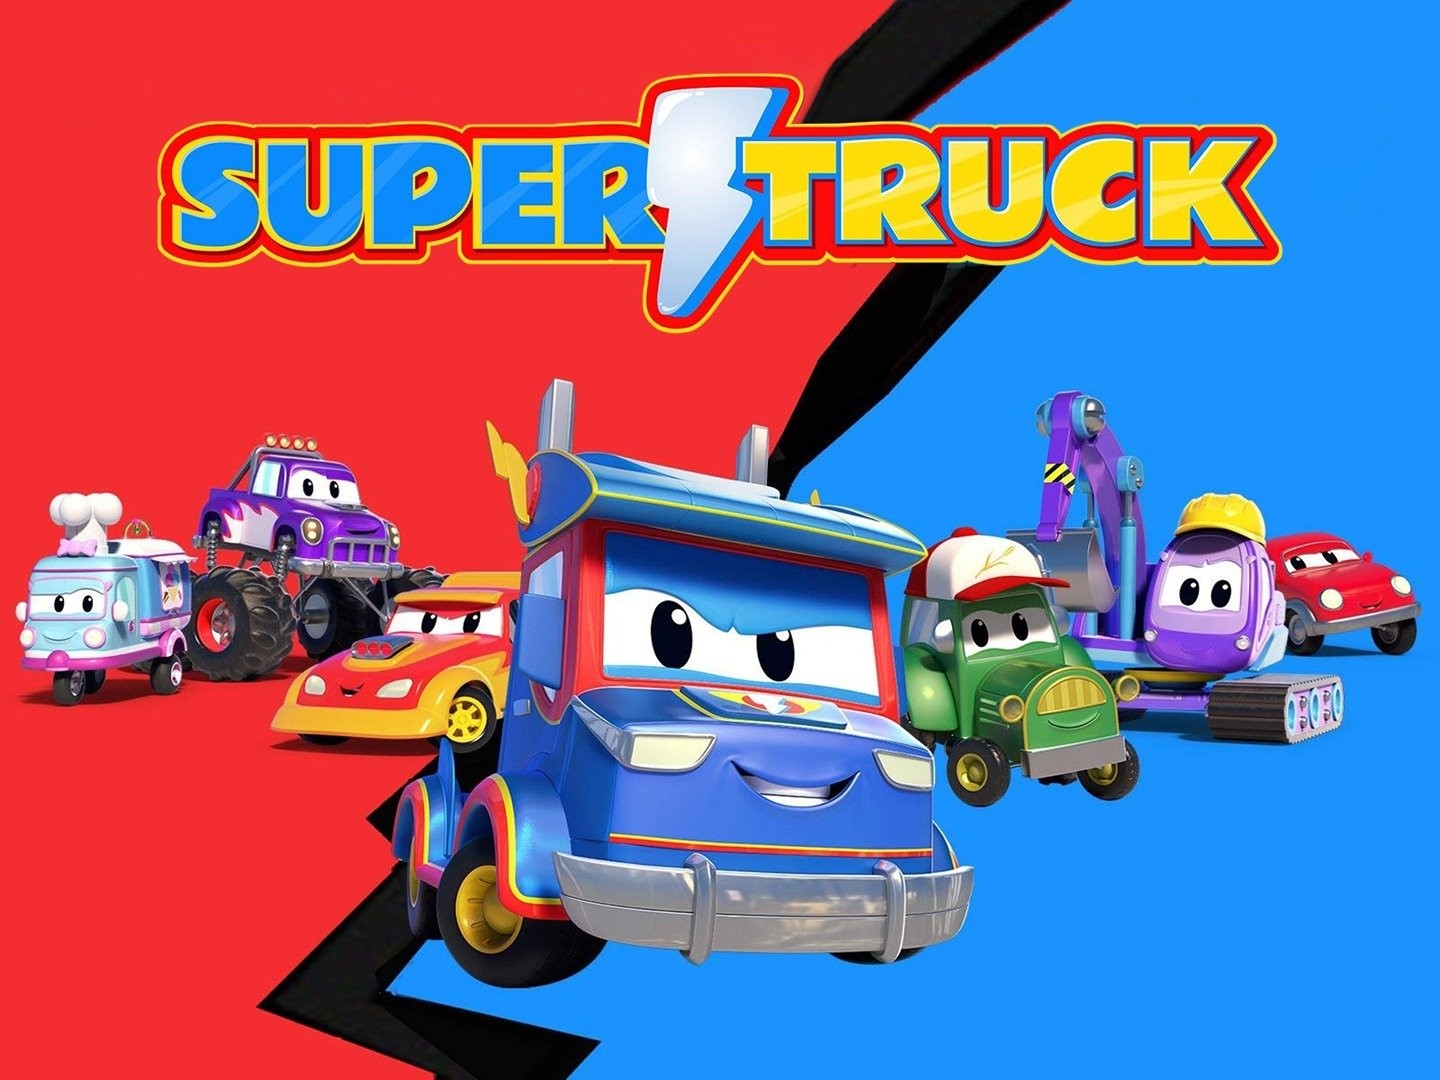 Super Truck: Carl the Transformer Season 1